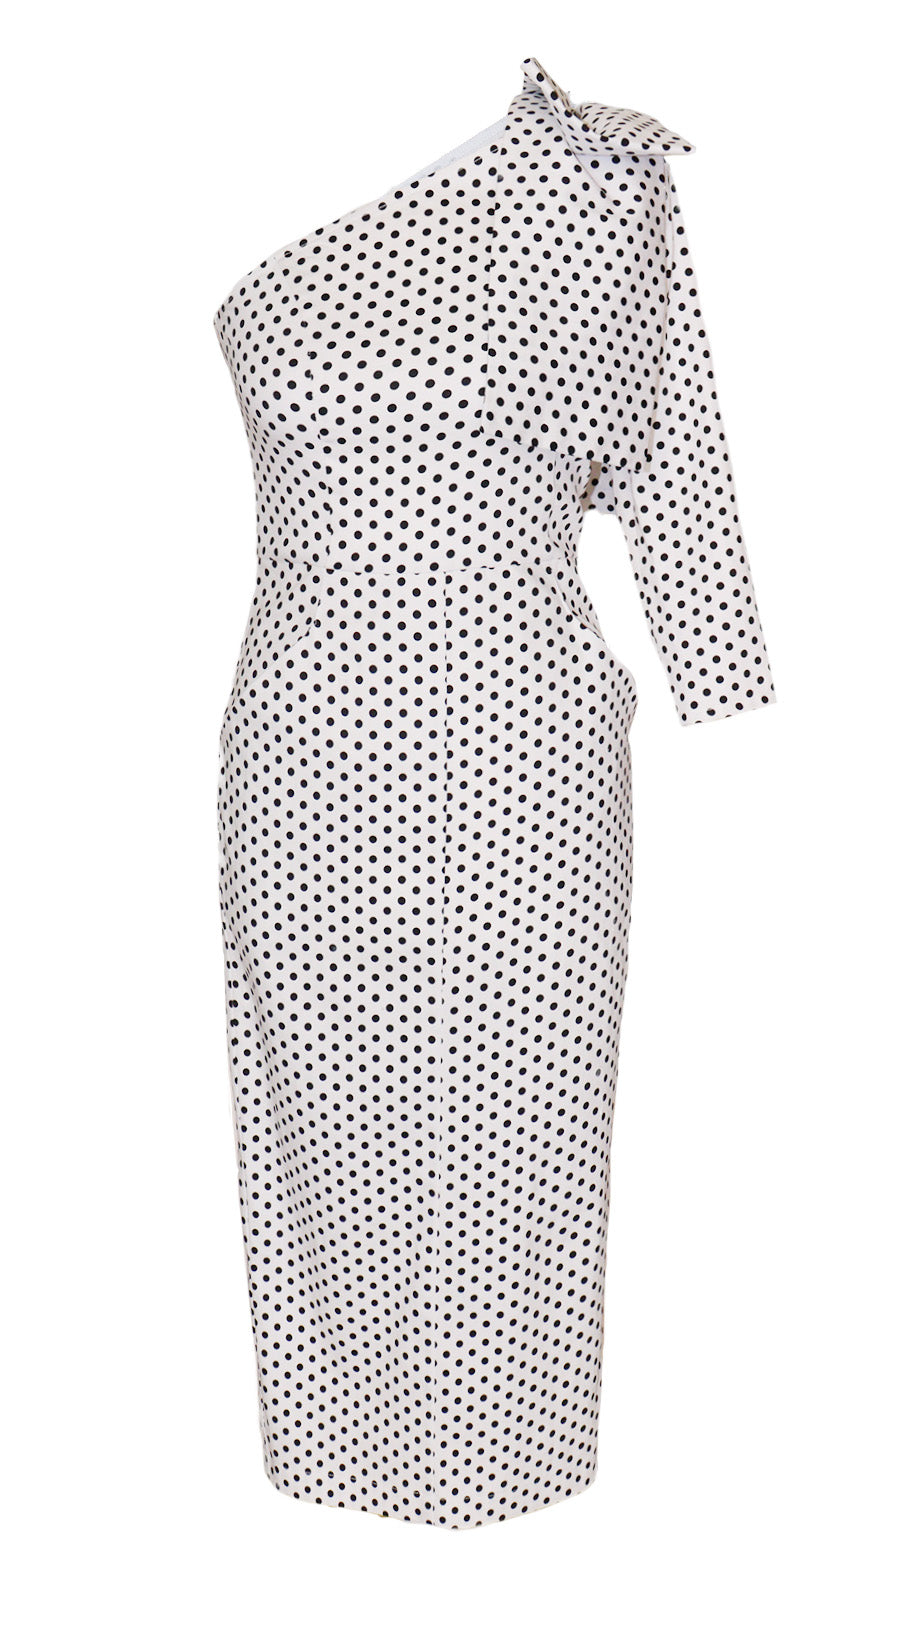 Straight fit dress,  black and white polka dot  print